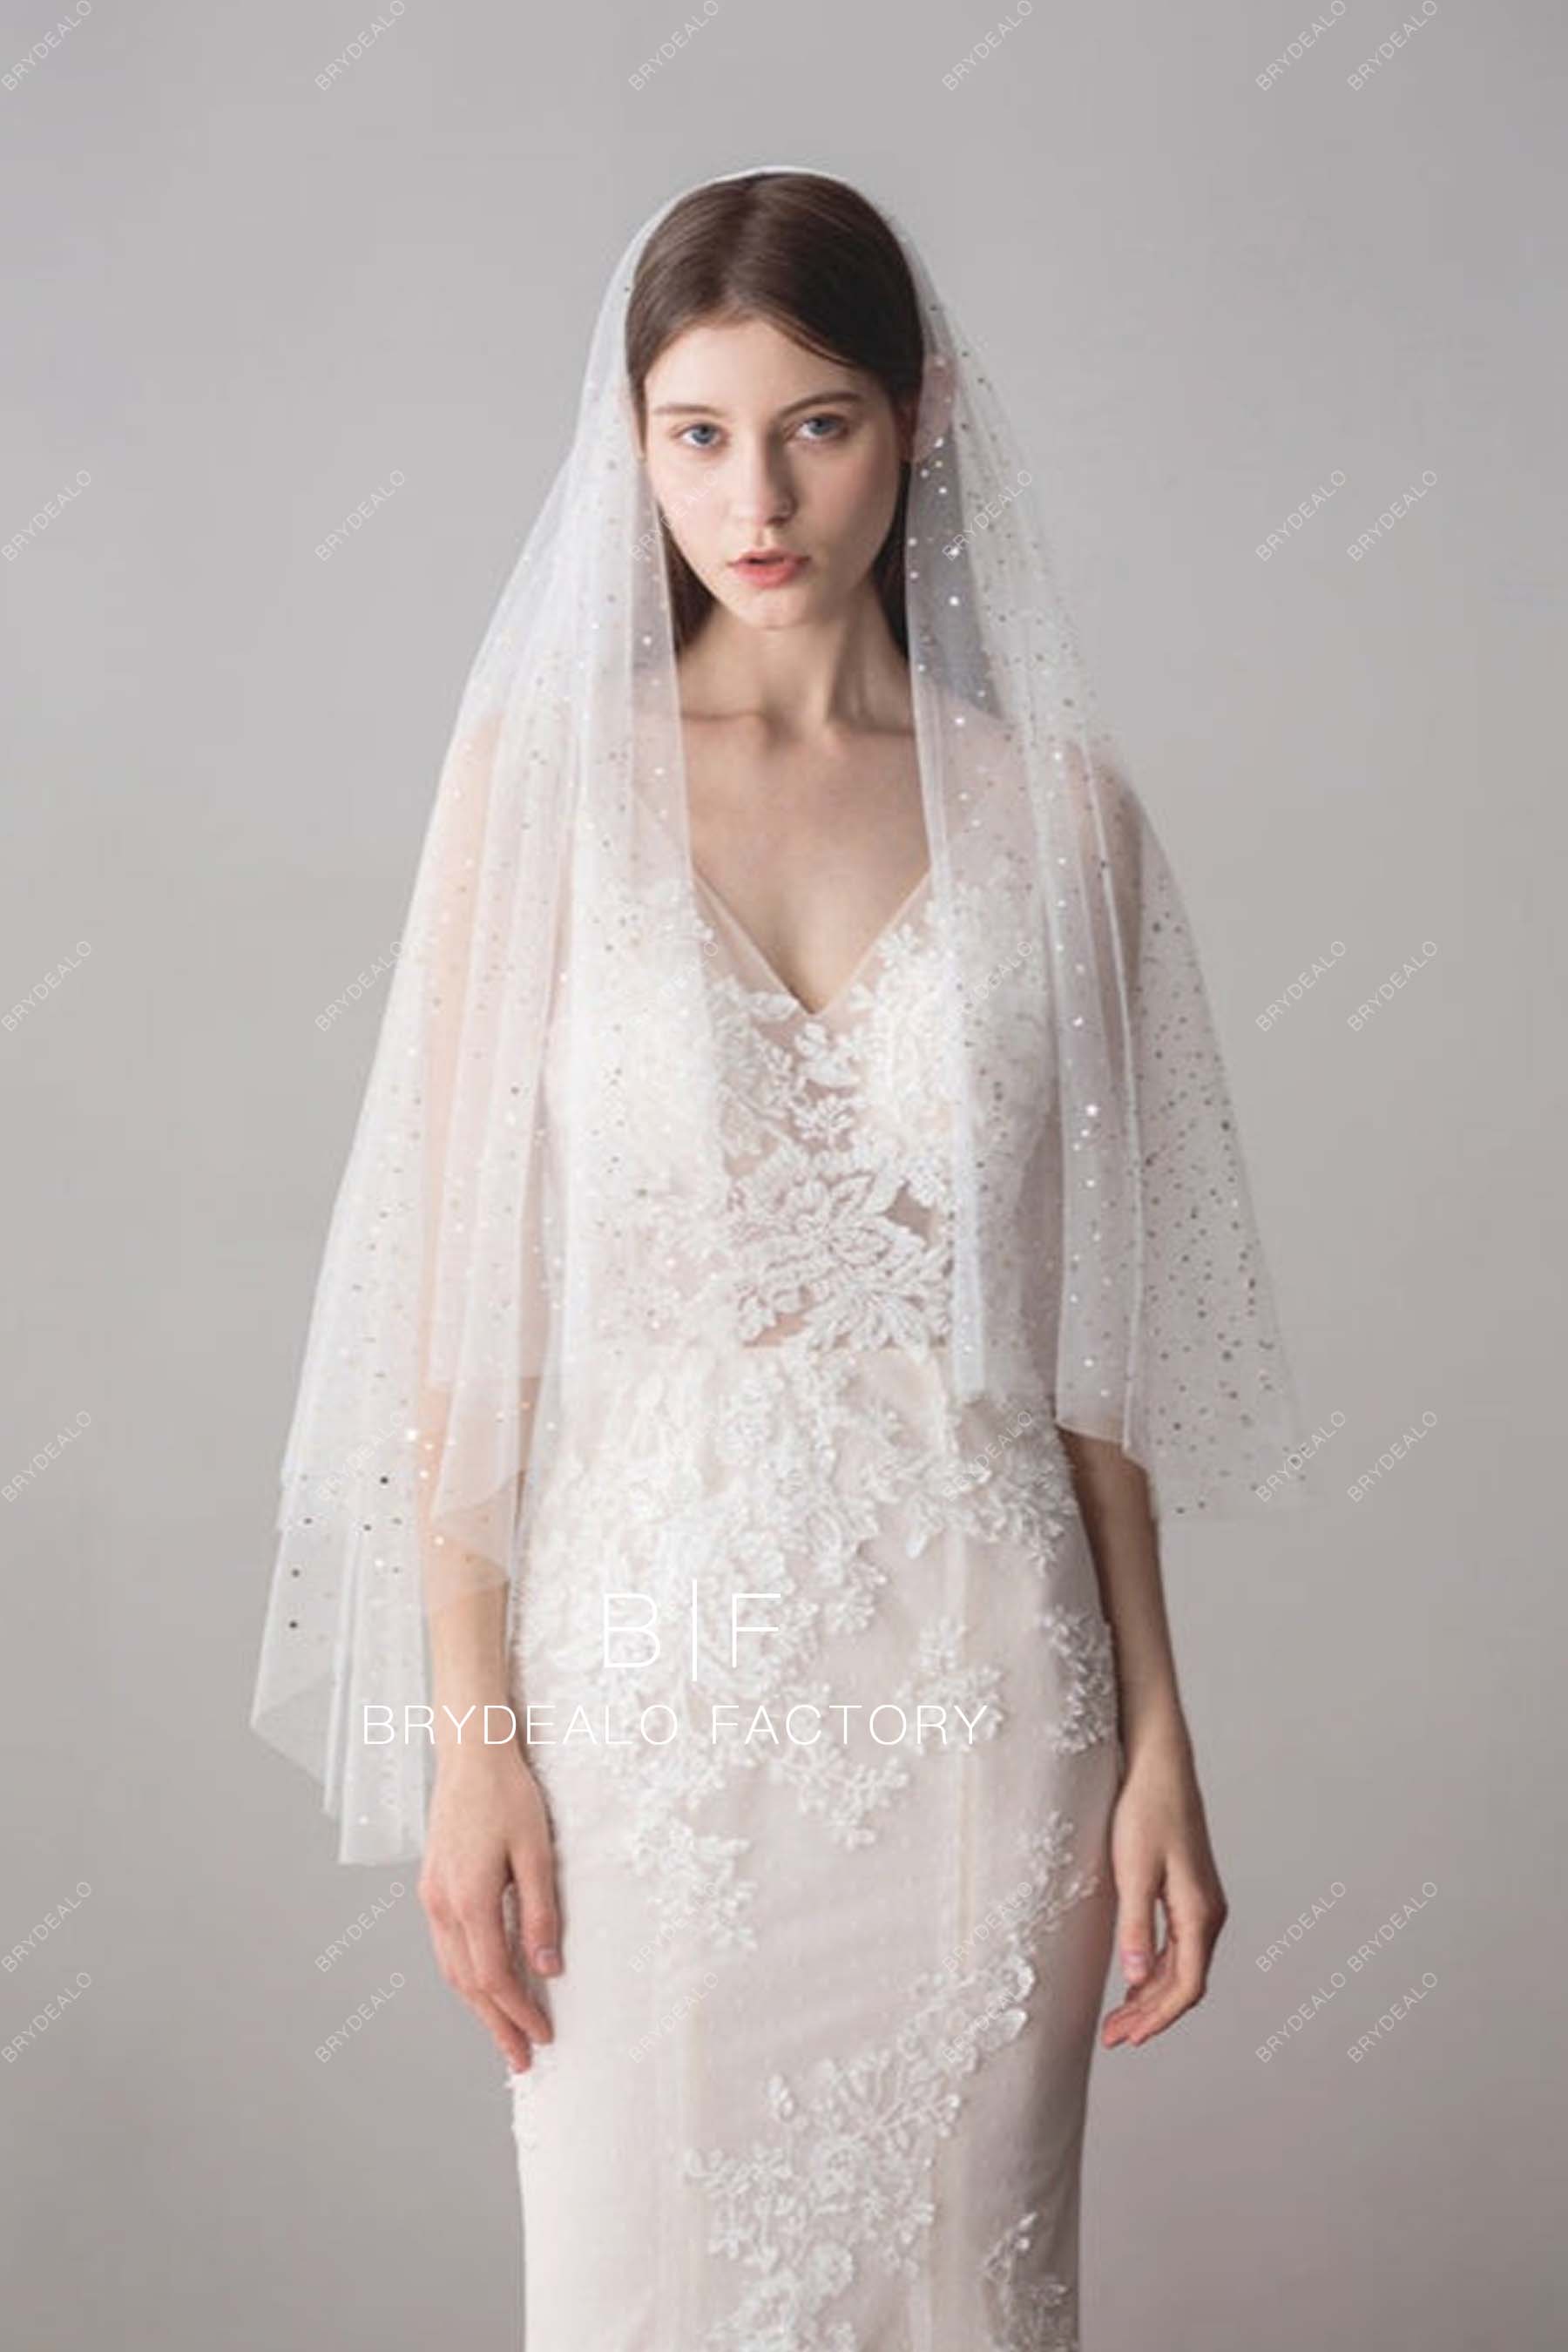 Bridal Starry Fingertip Length Wedding Veil